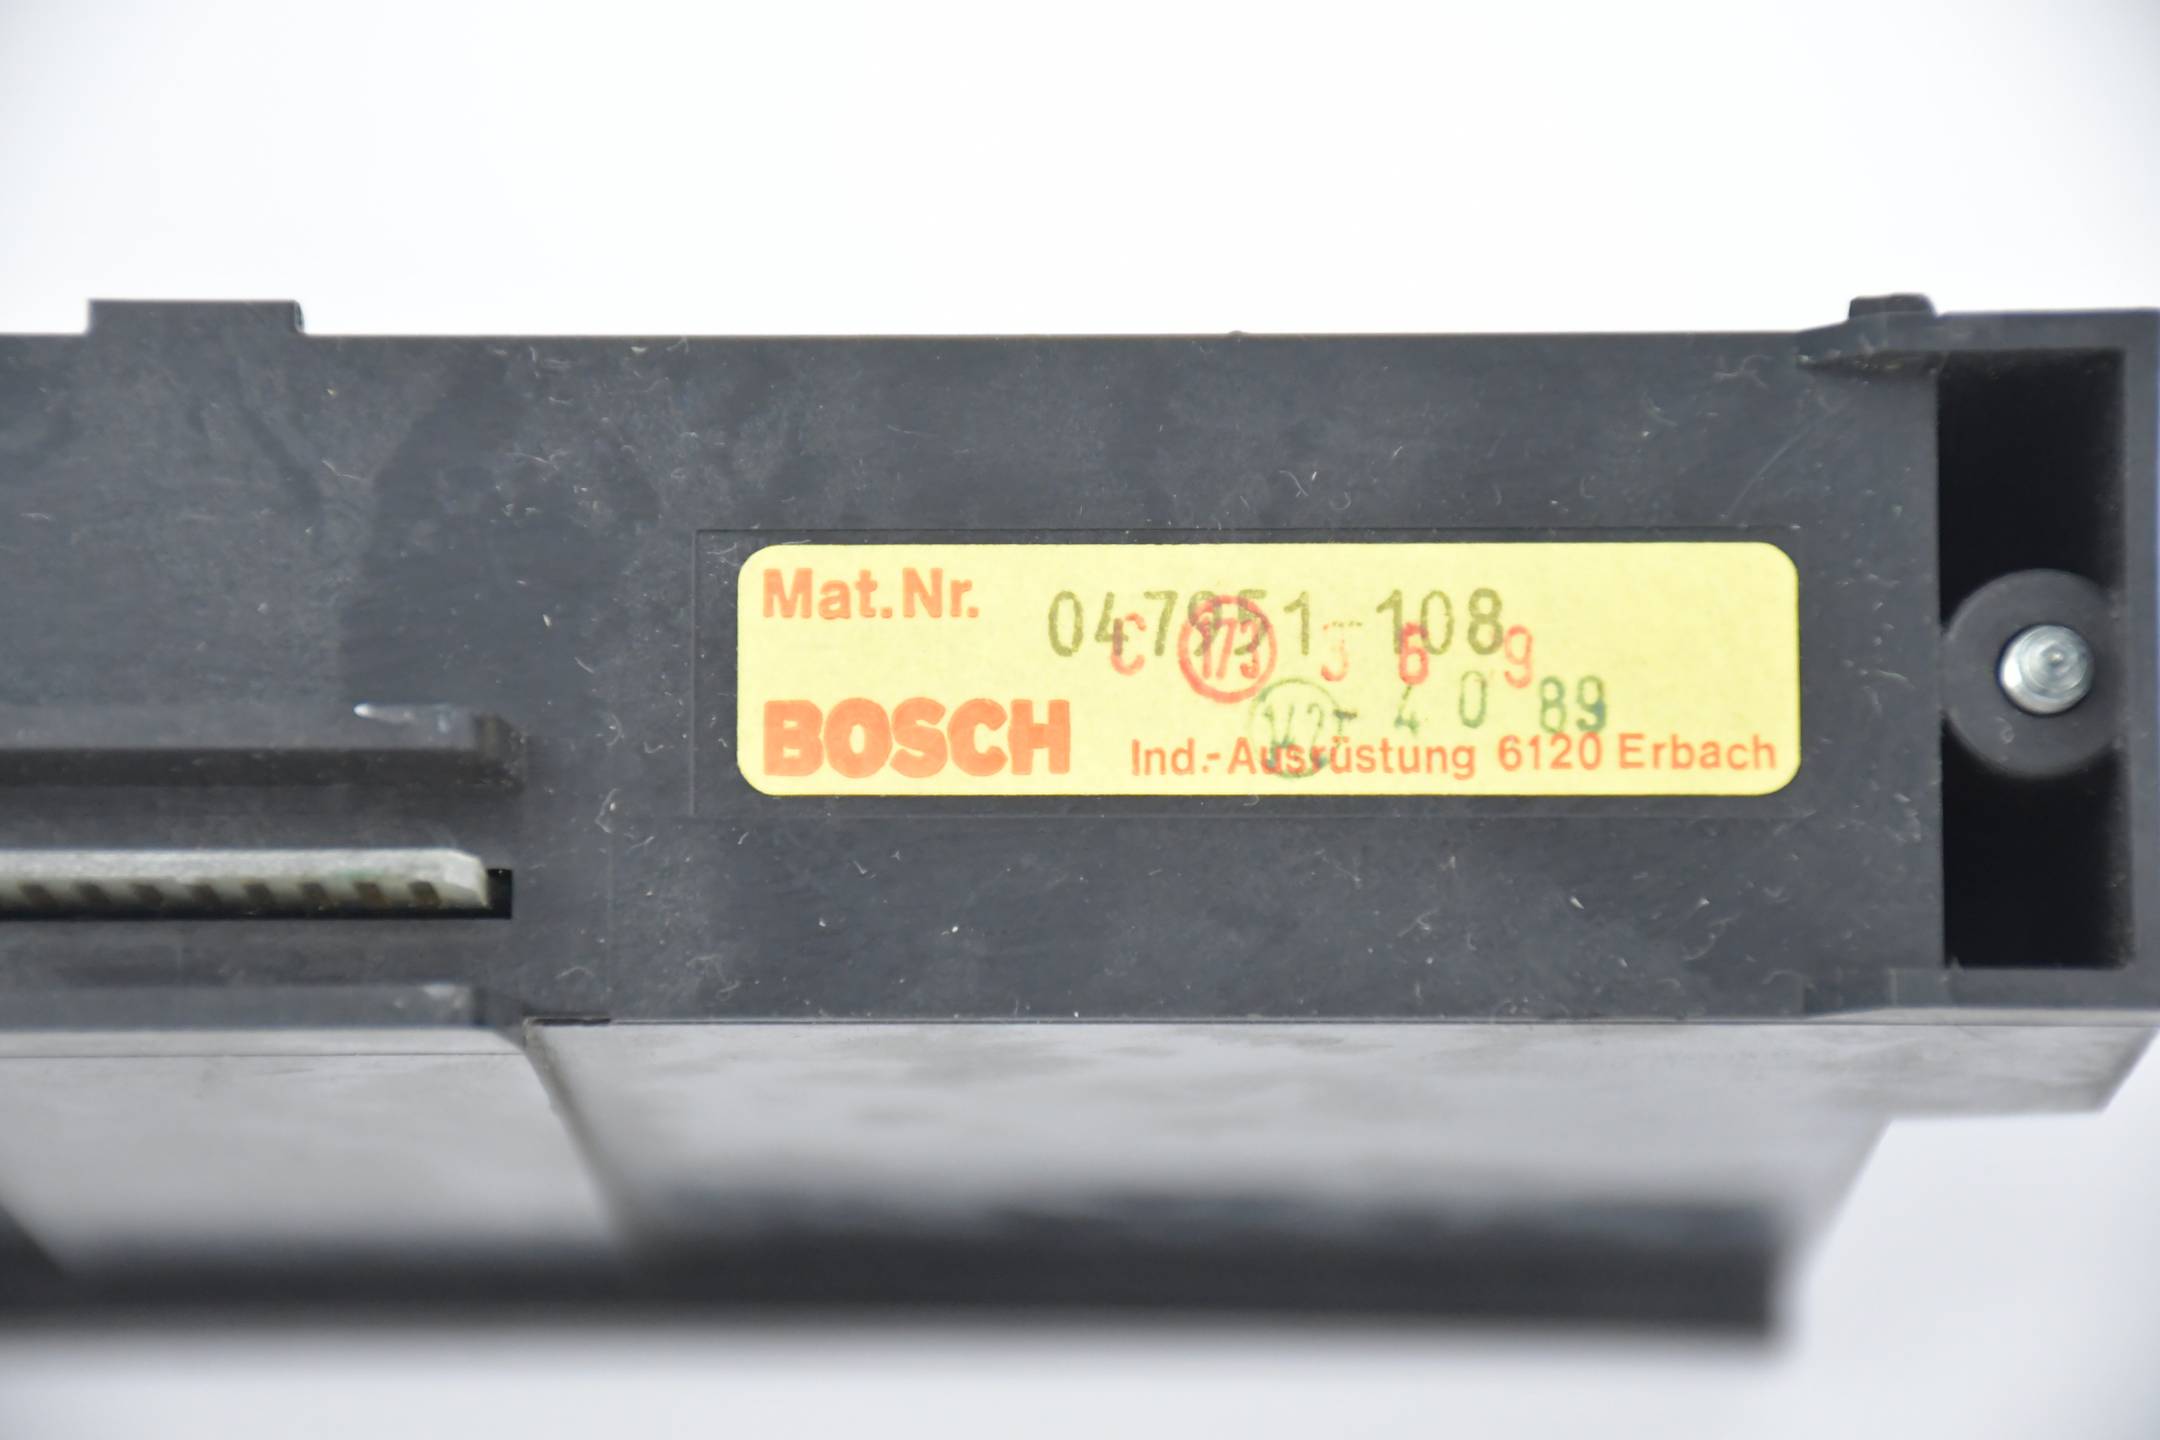 Bosch Digital Input PC 200  047951-108 E24V